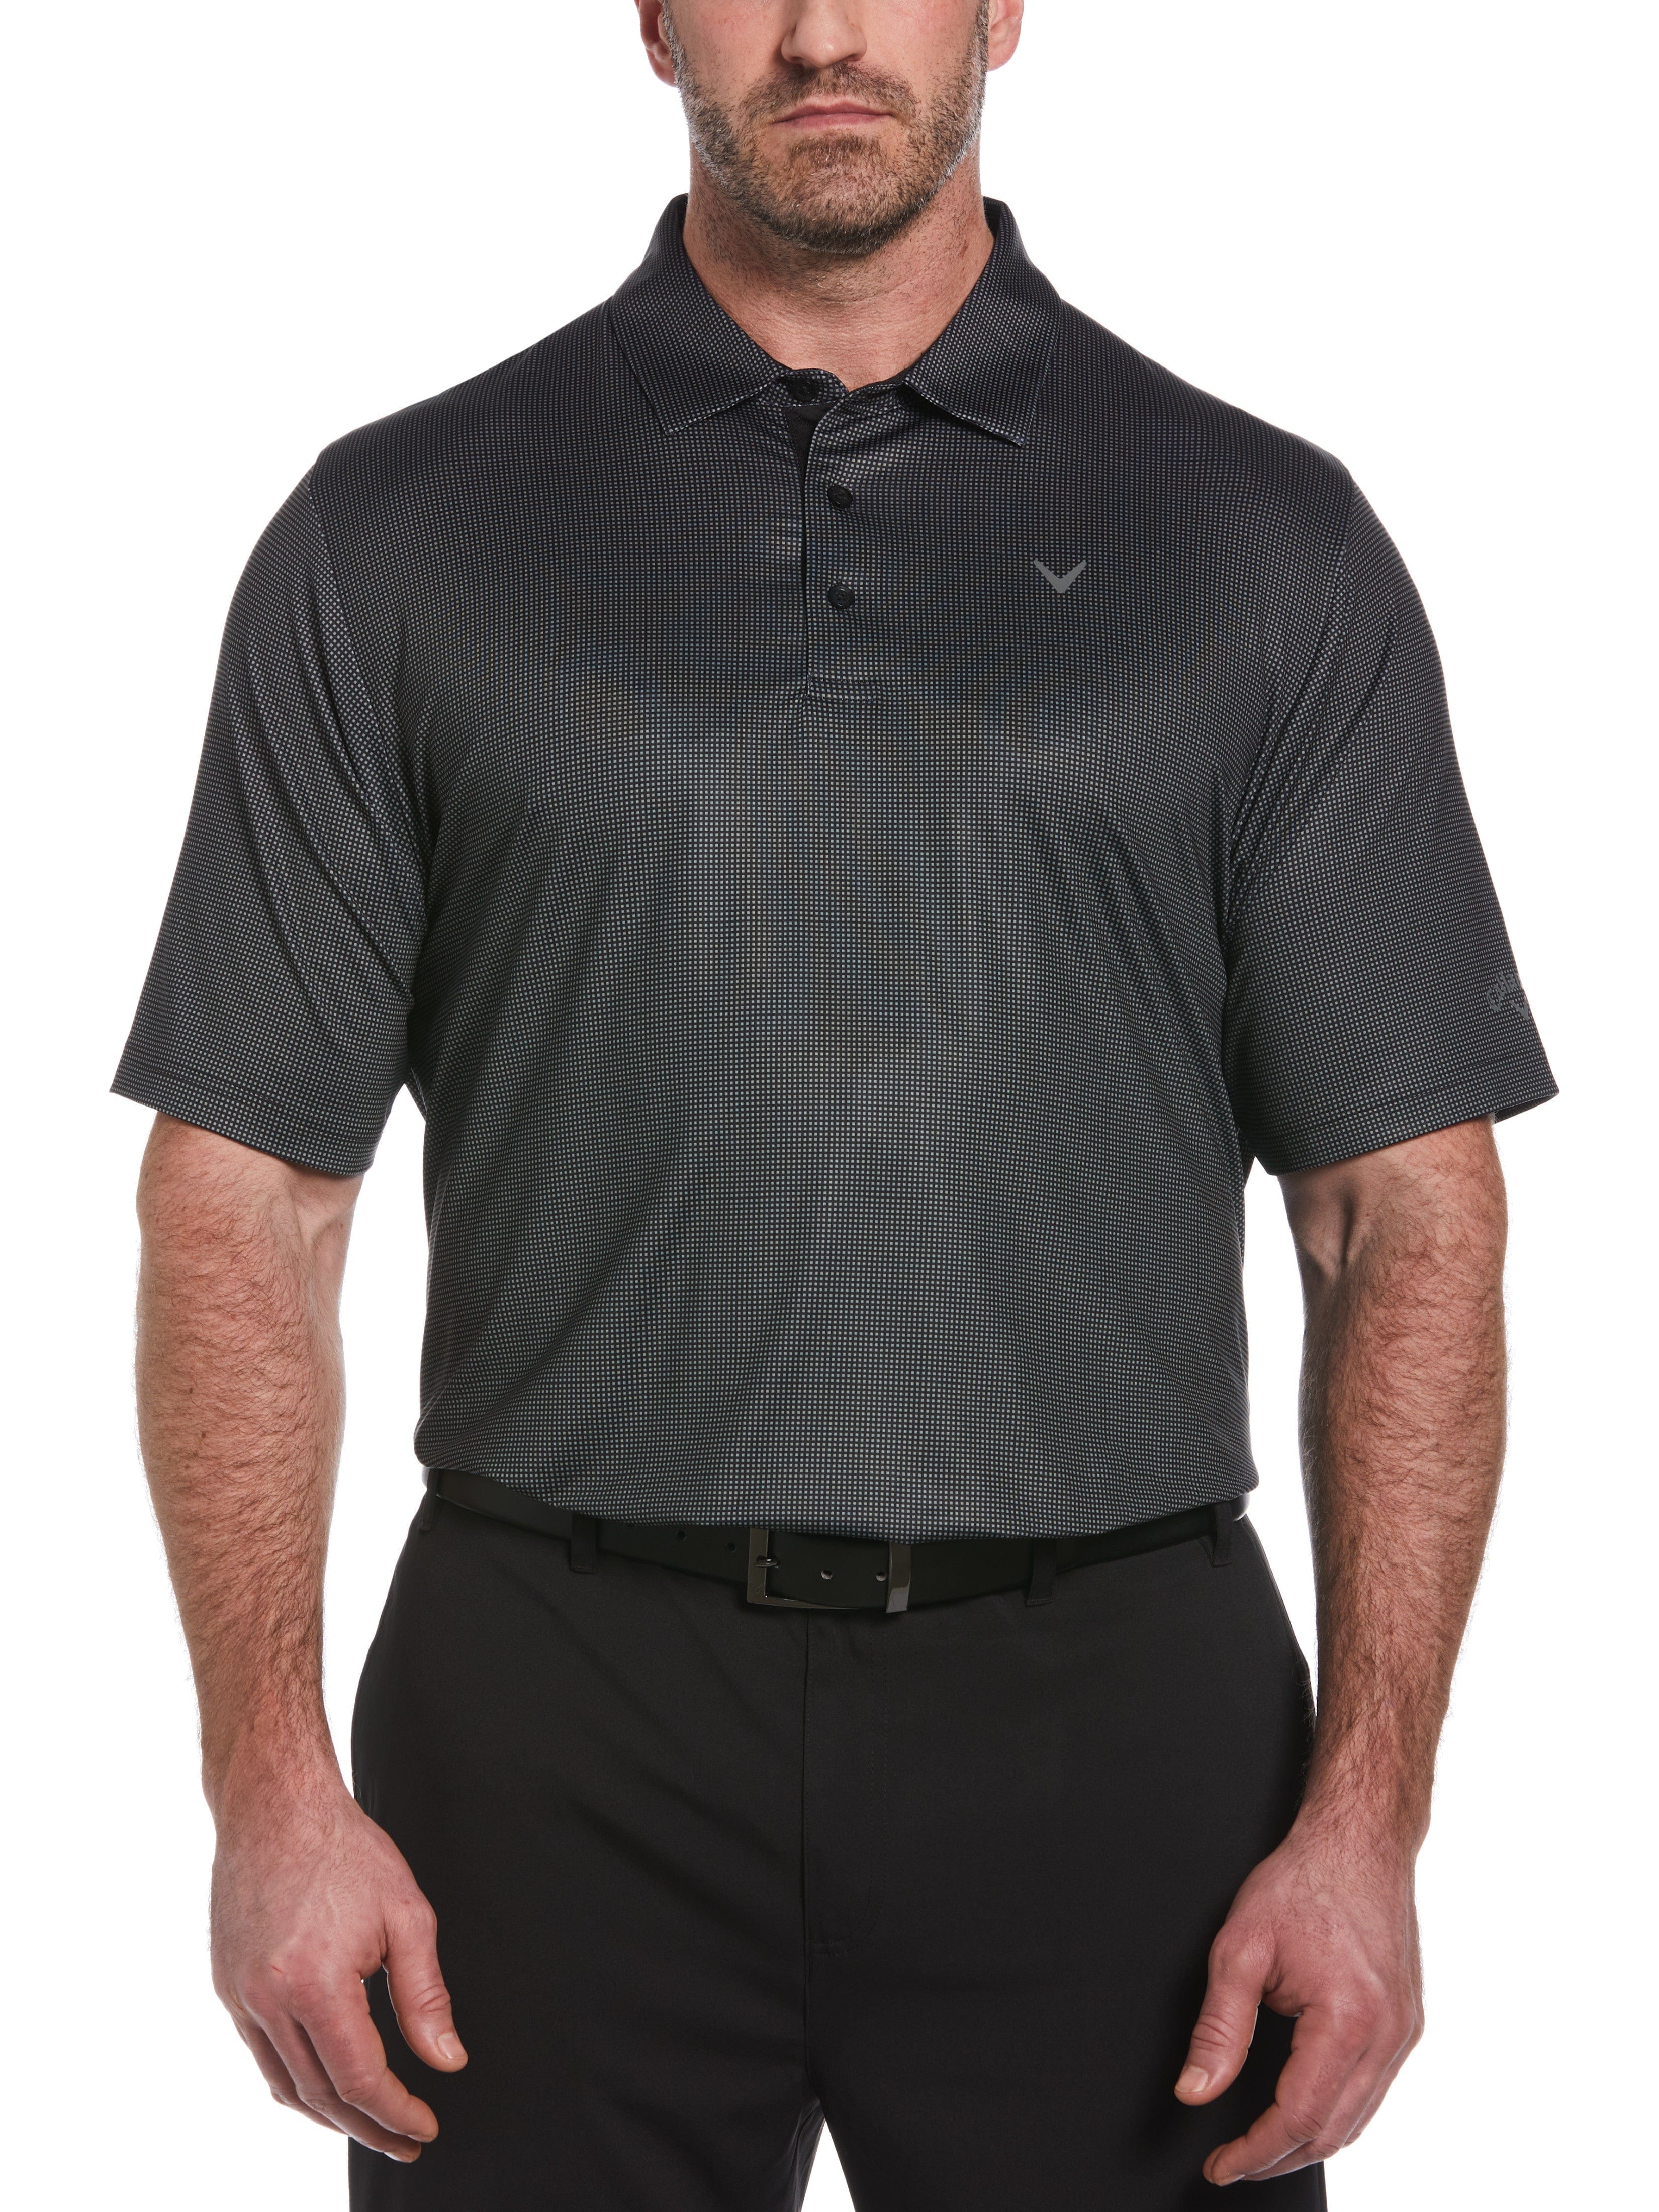 Callaway Apparel Mens Big & Tall Printed Gingham Swing Tech Polo Shirt, Size LT, Black, Polyester/Elastane | Golf Apparel Shop